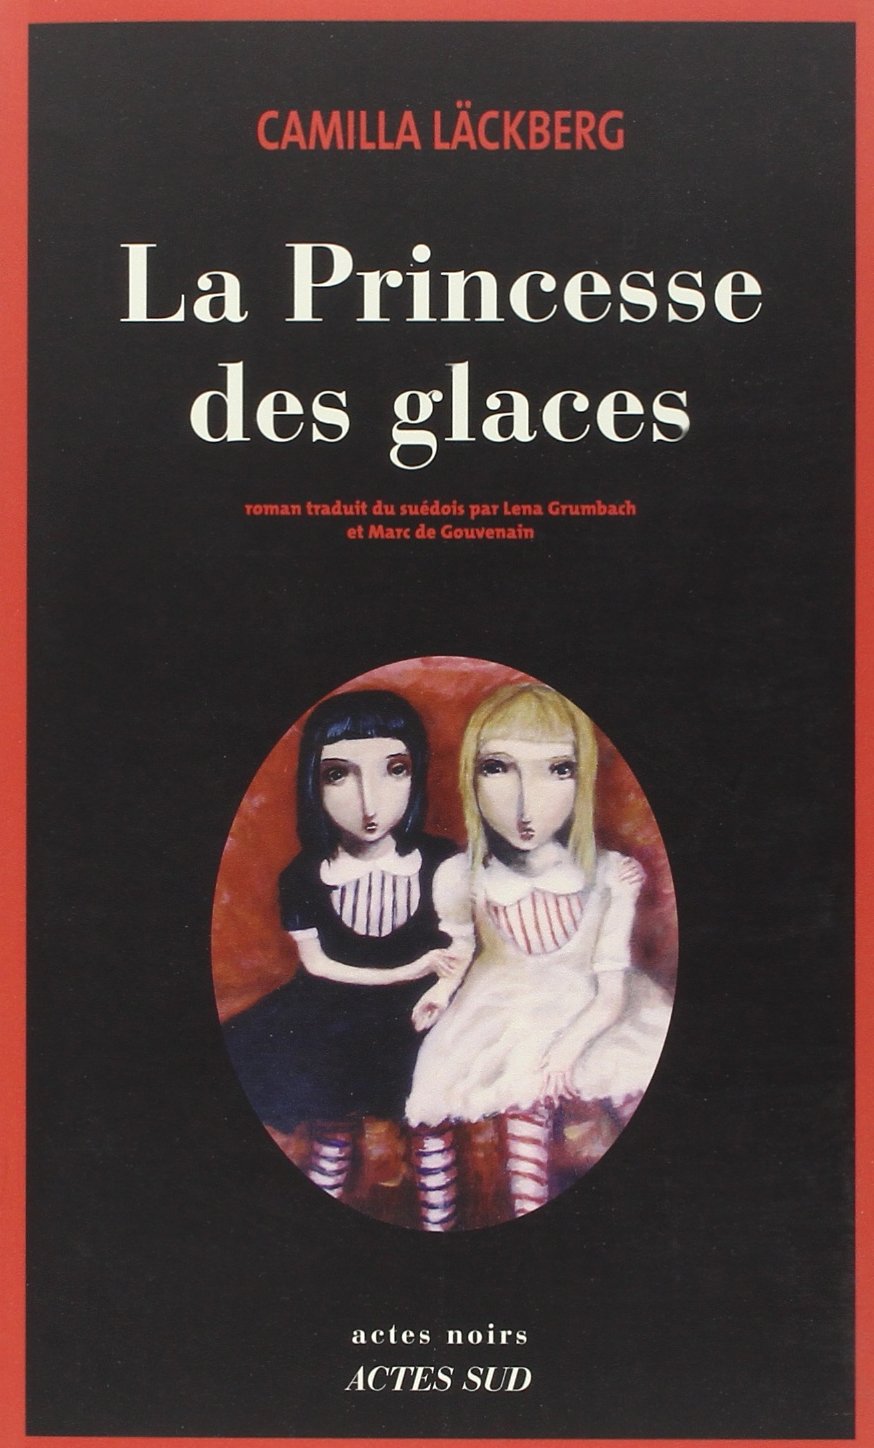 Livre ISBN 2742775471 Actes noirs : La princesse des glaces (Camilla Läckberg)